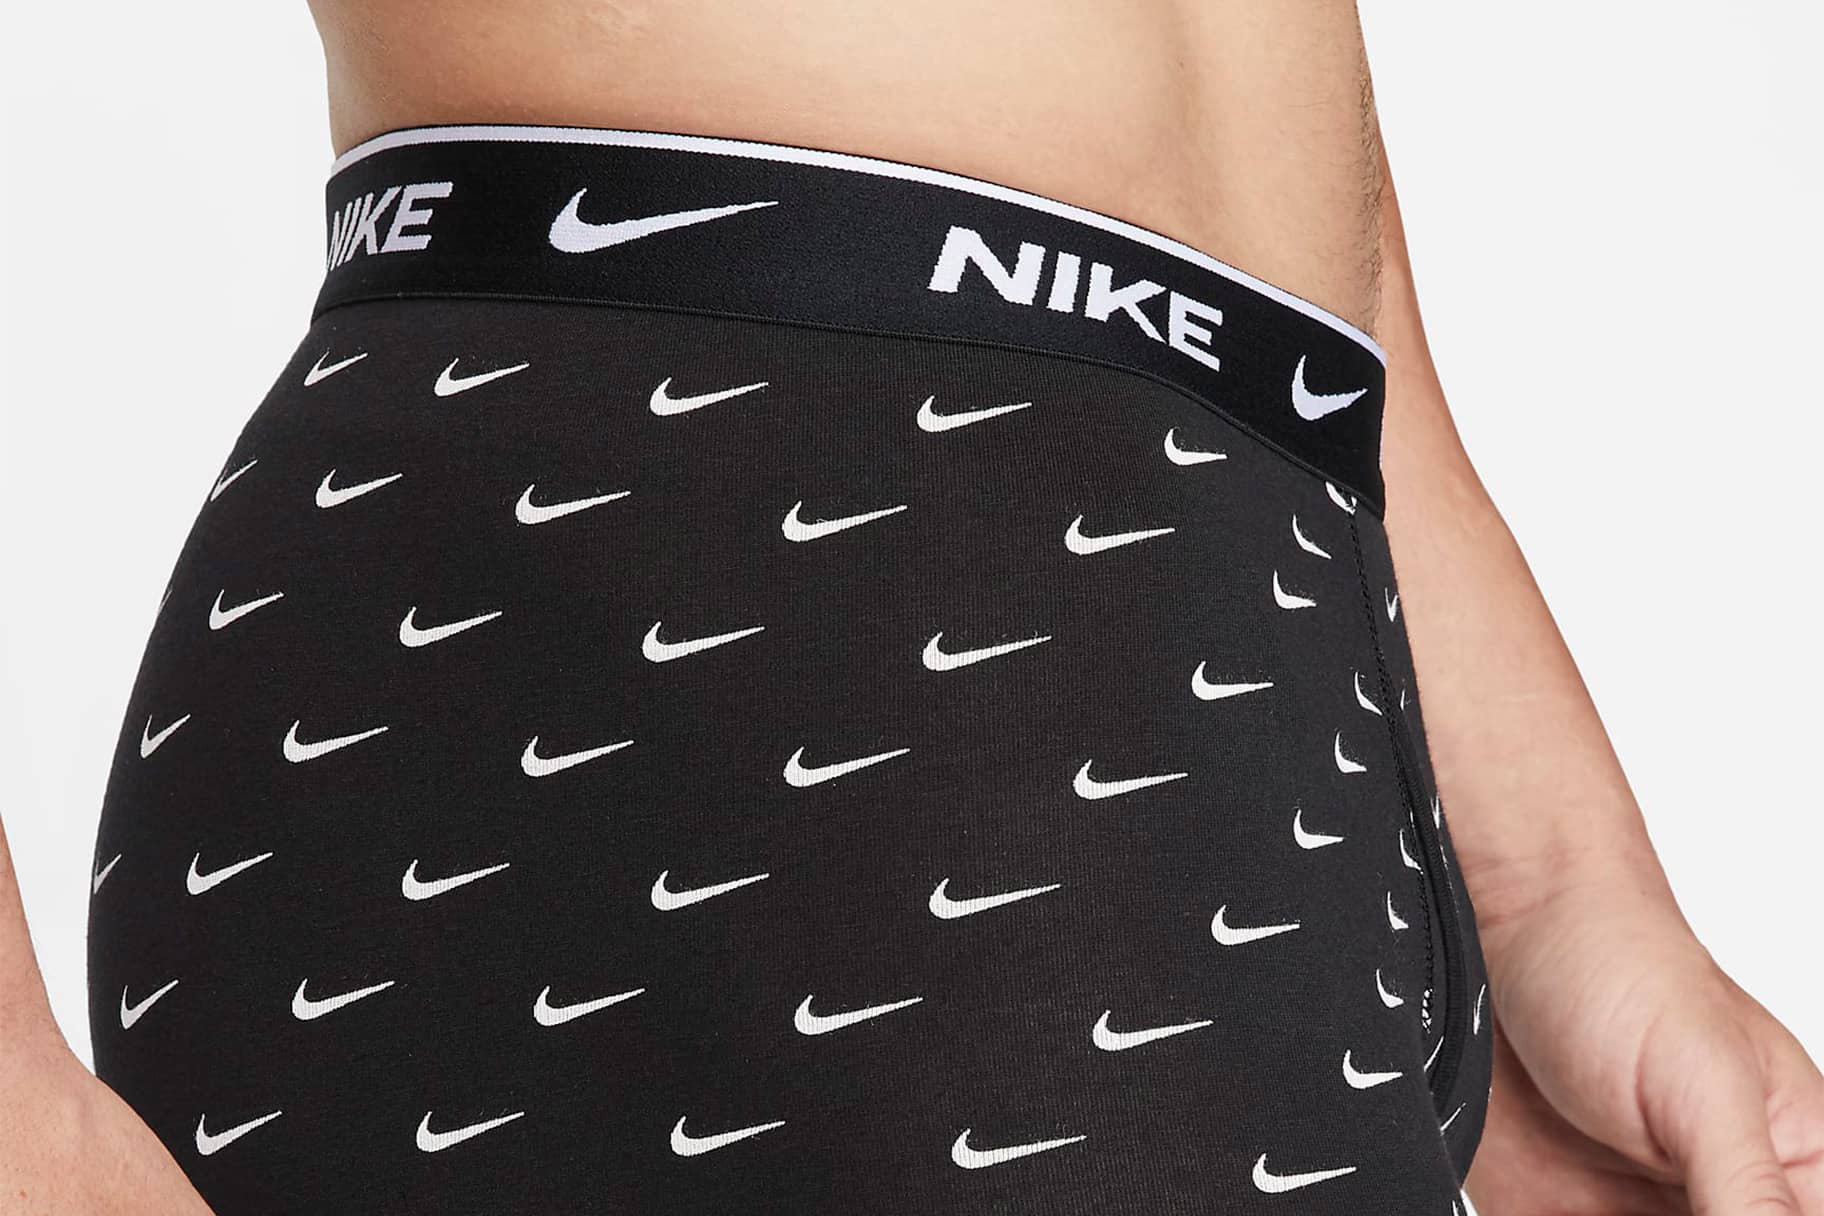 Nike's beste herenondergoed